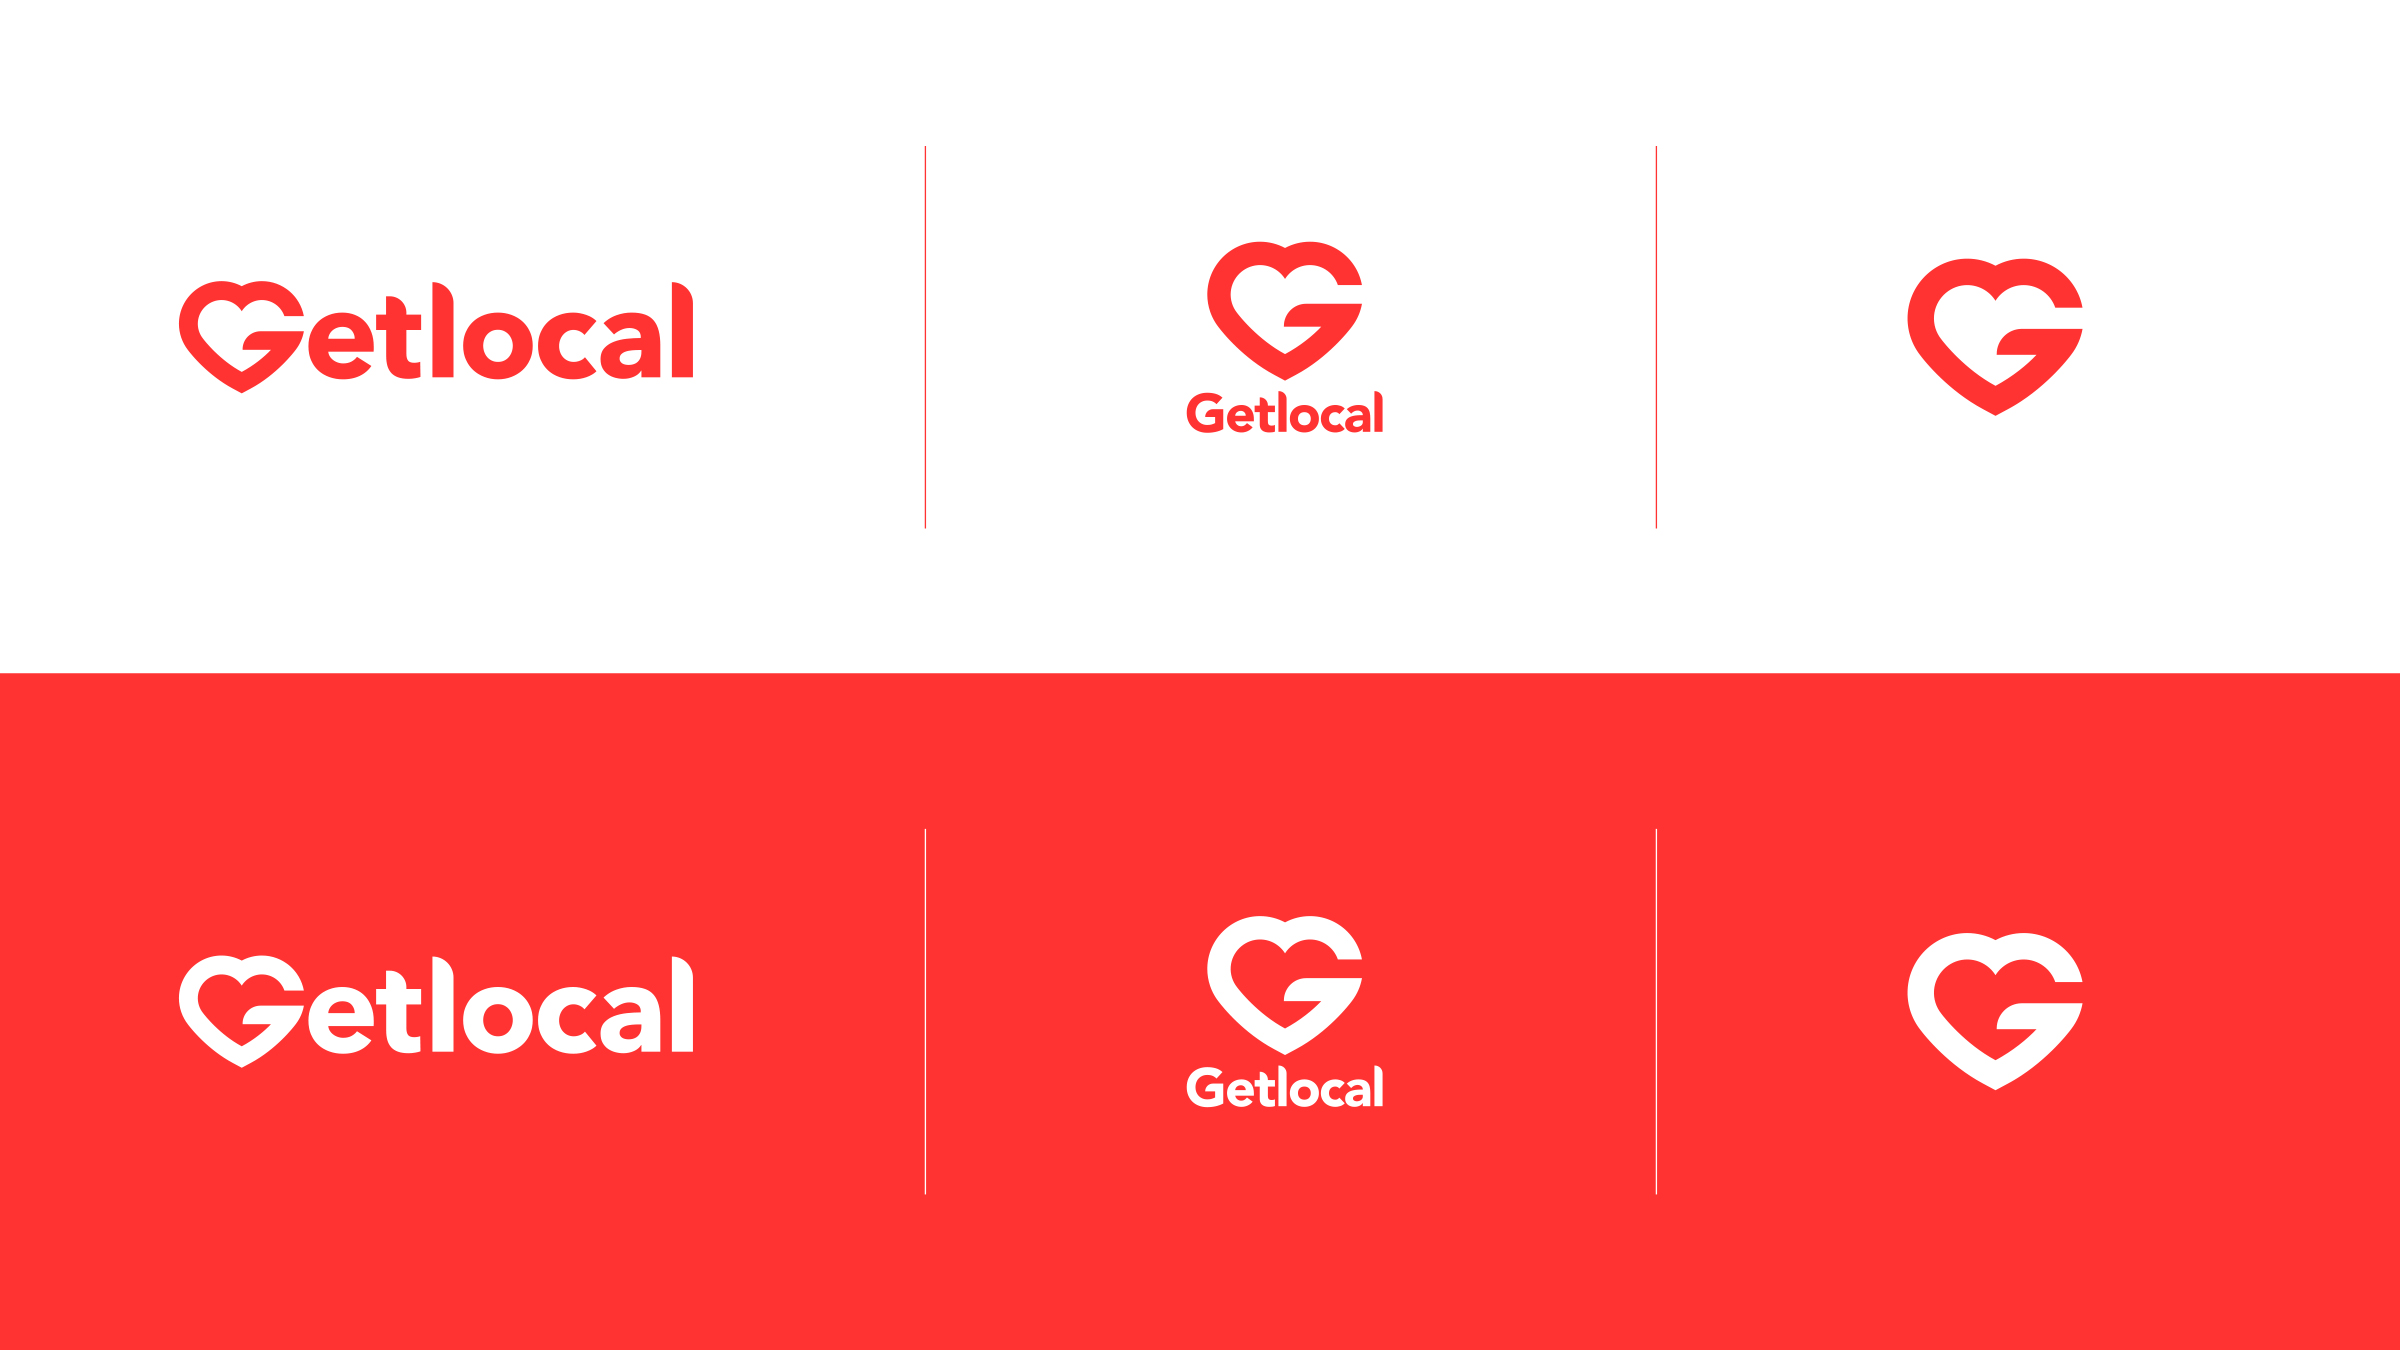 Getlocal Visual Identity